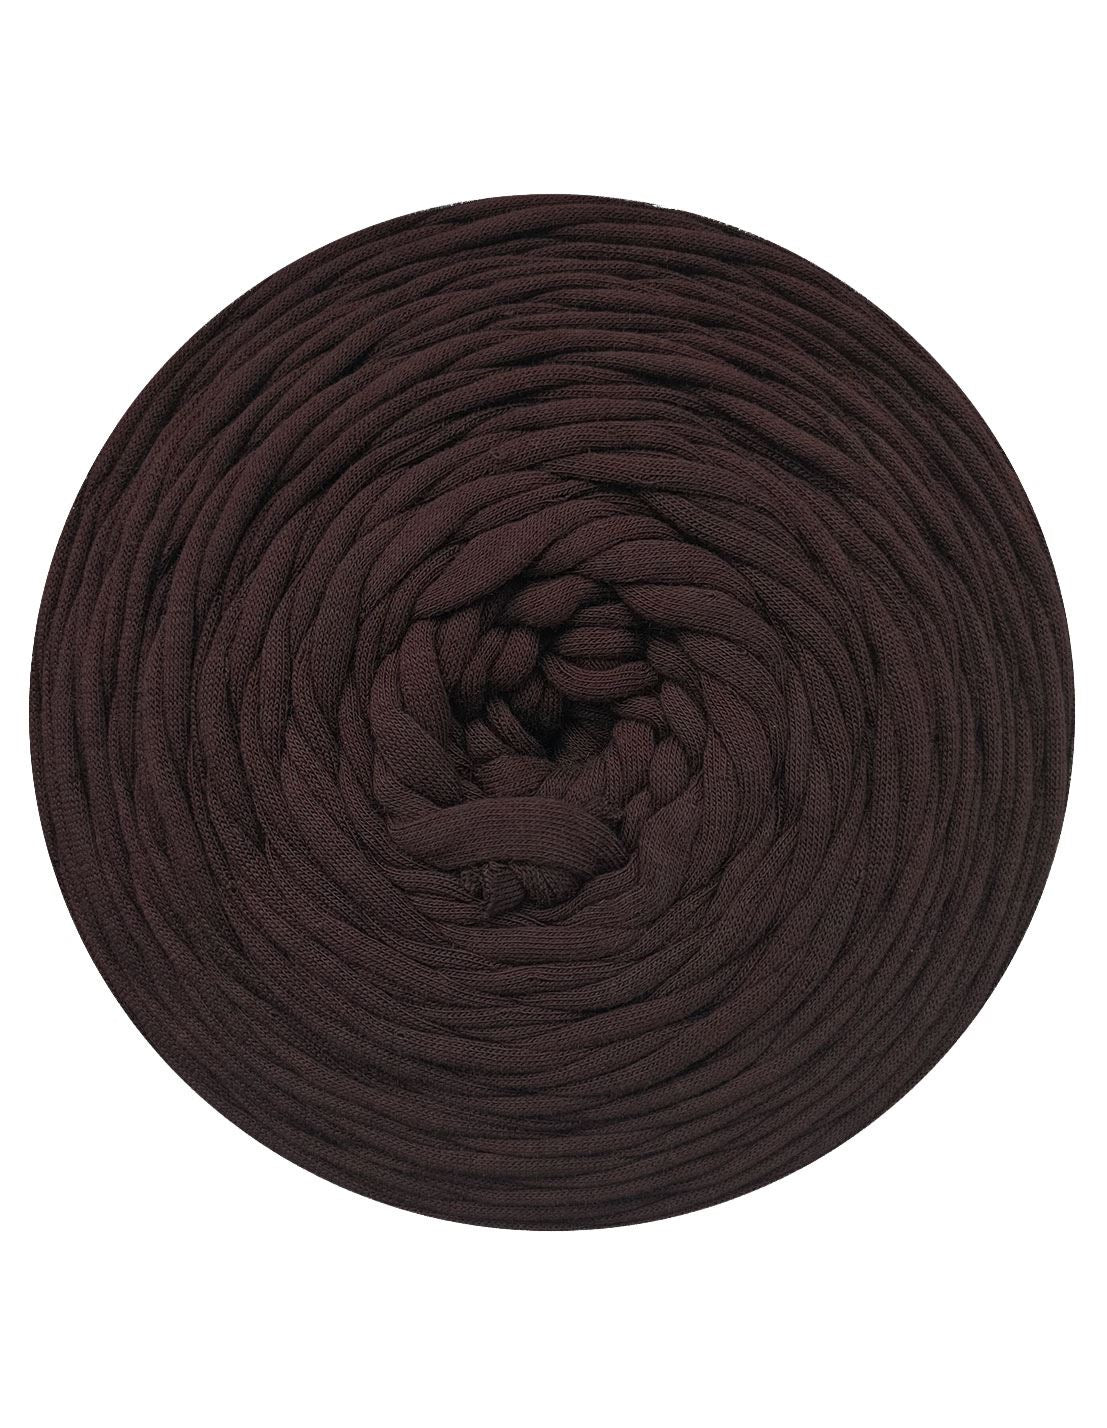 Chocolate brown t-shirt yarn by Rescue Yarn (100-120m)